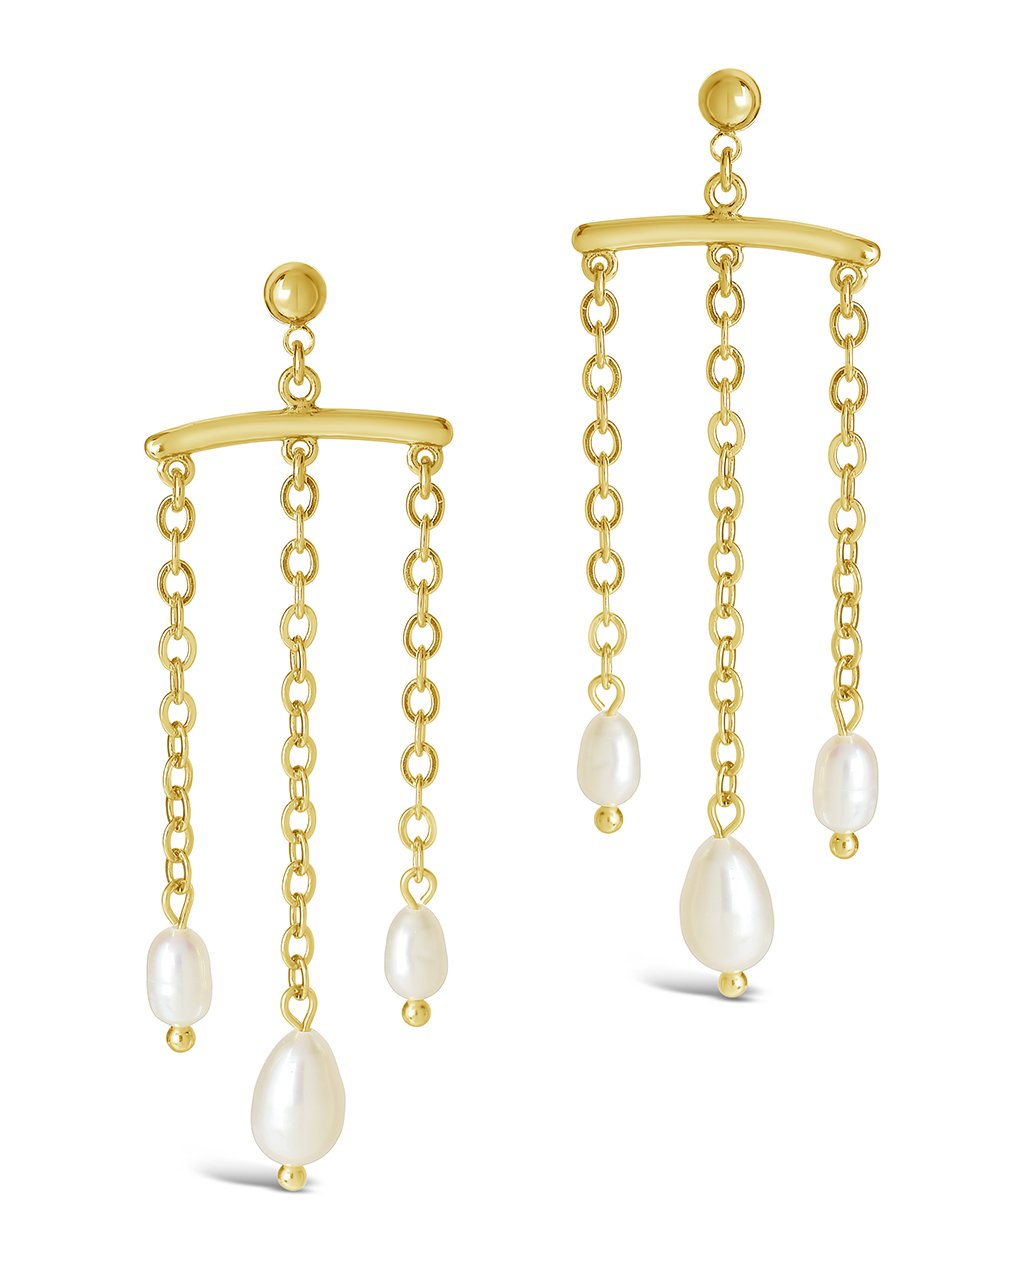 Chains & Pearls Chandelier Drop Earrings Earring Sterling Forever Gold 